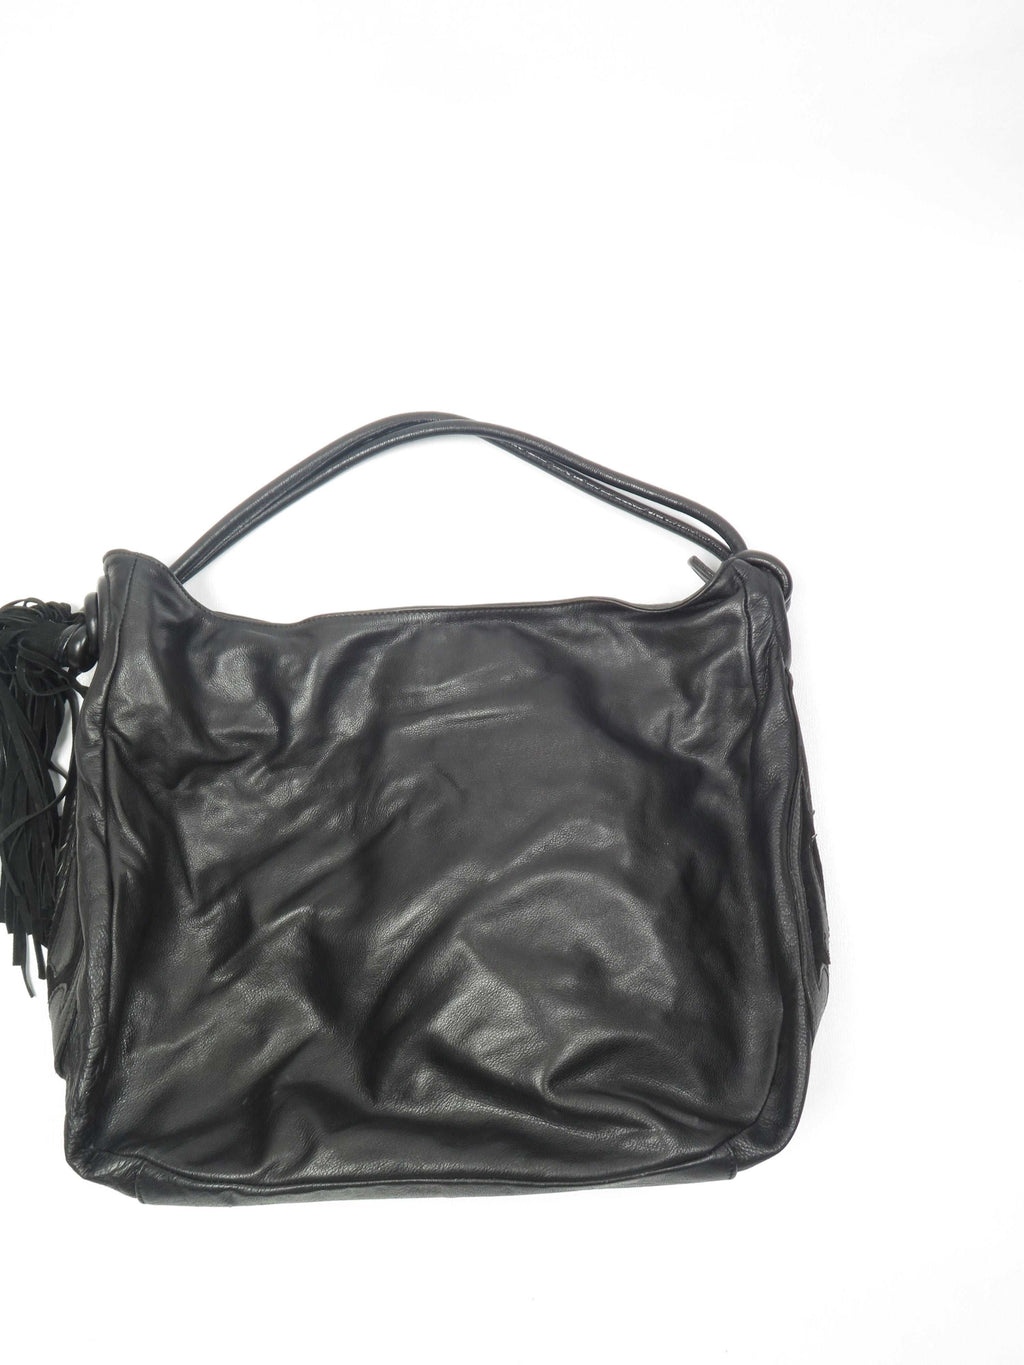 Black Leather Anna Biagini vintage bag